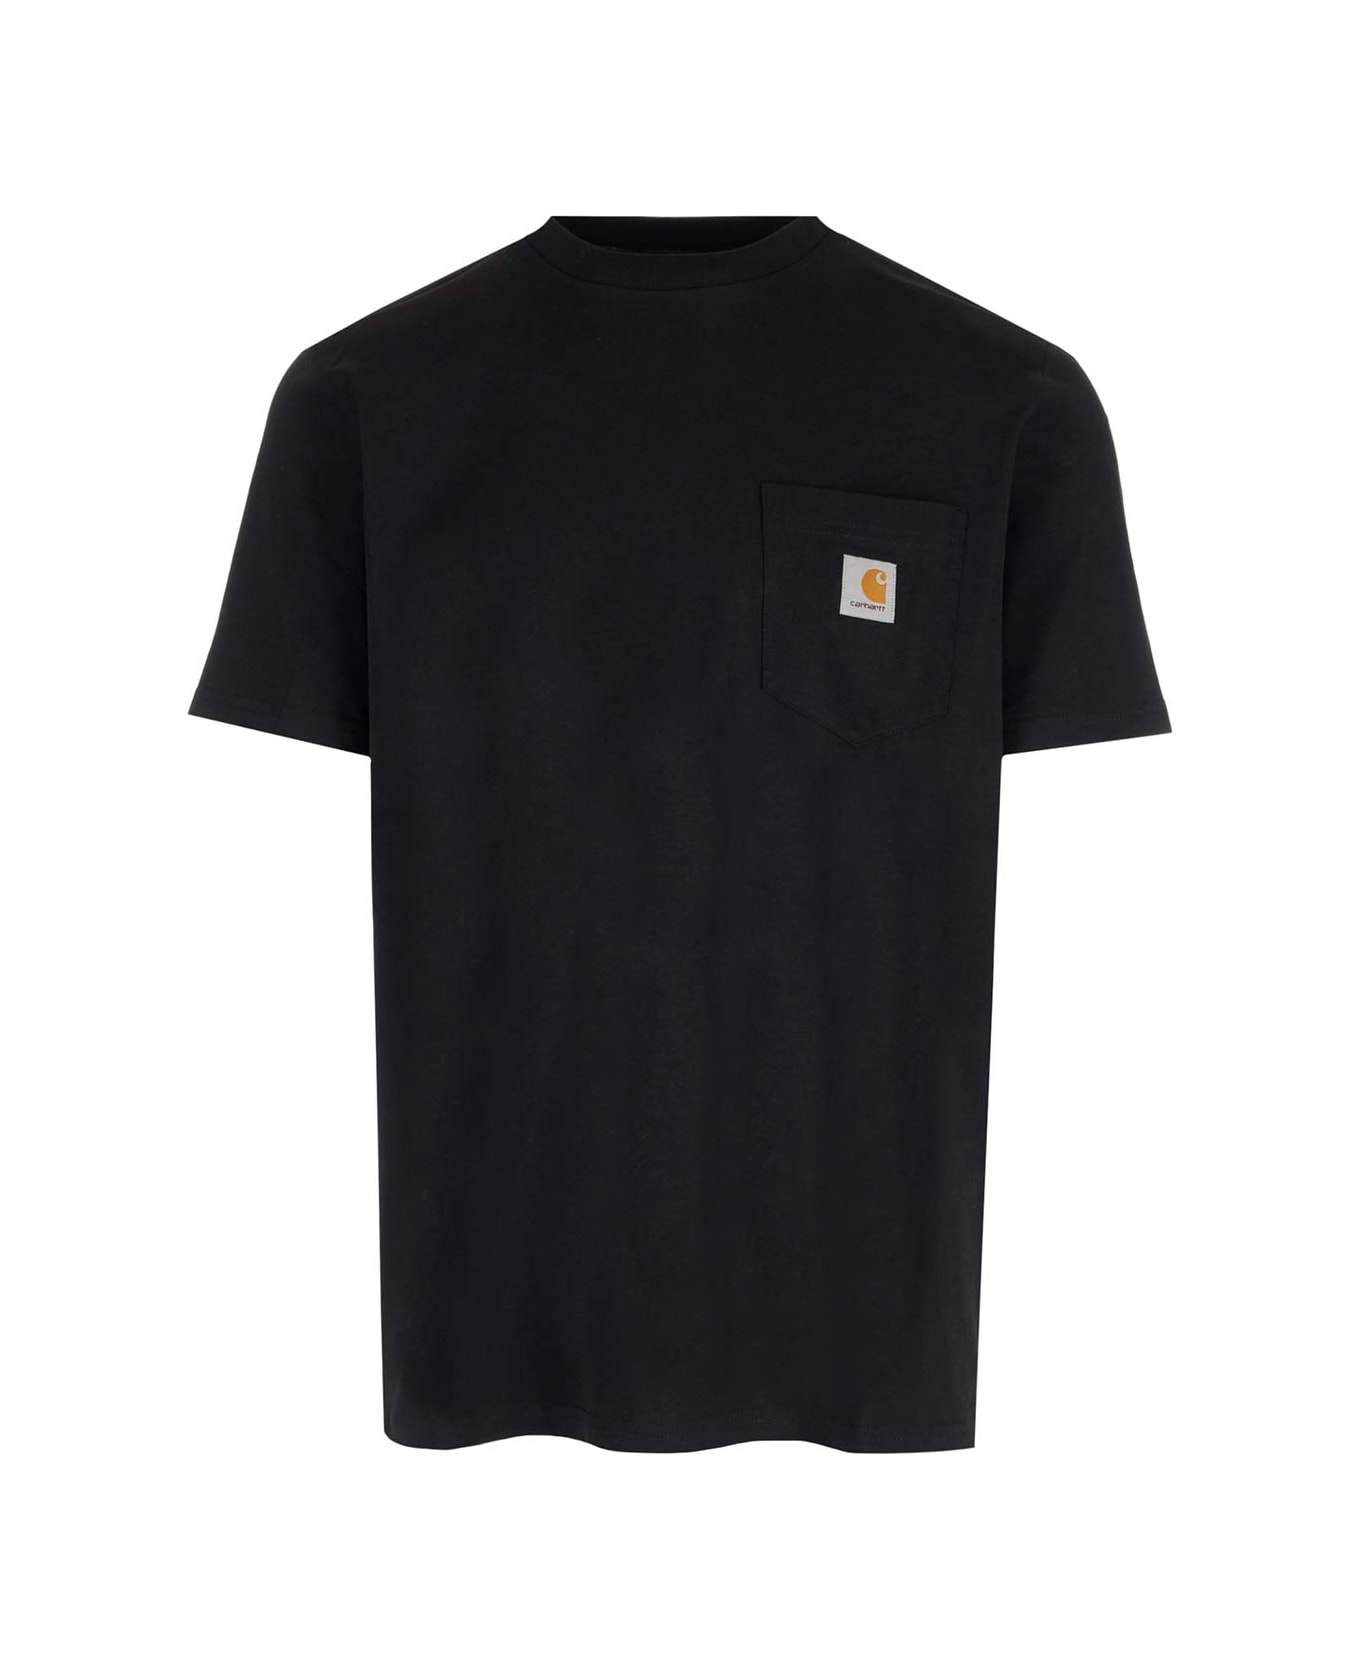 Carhartt T-shirt With Pocket - Black